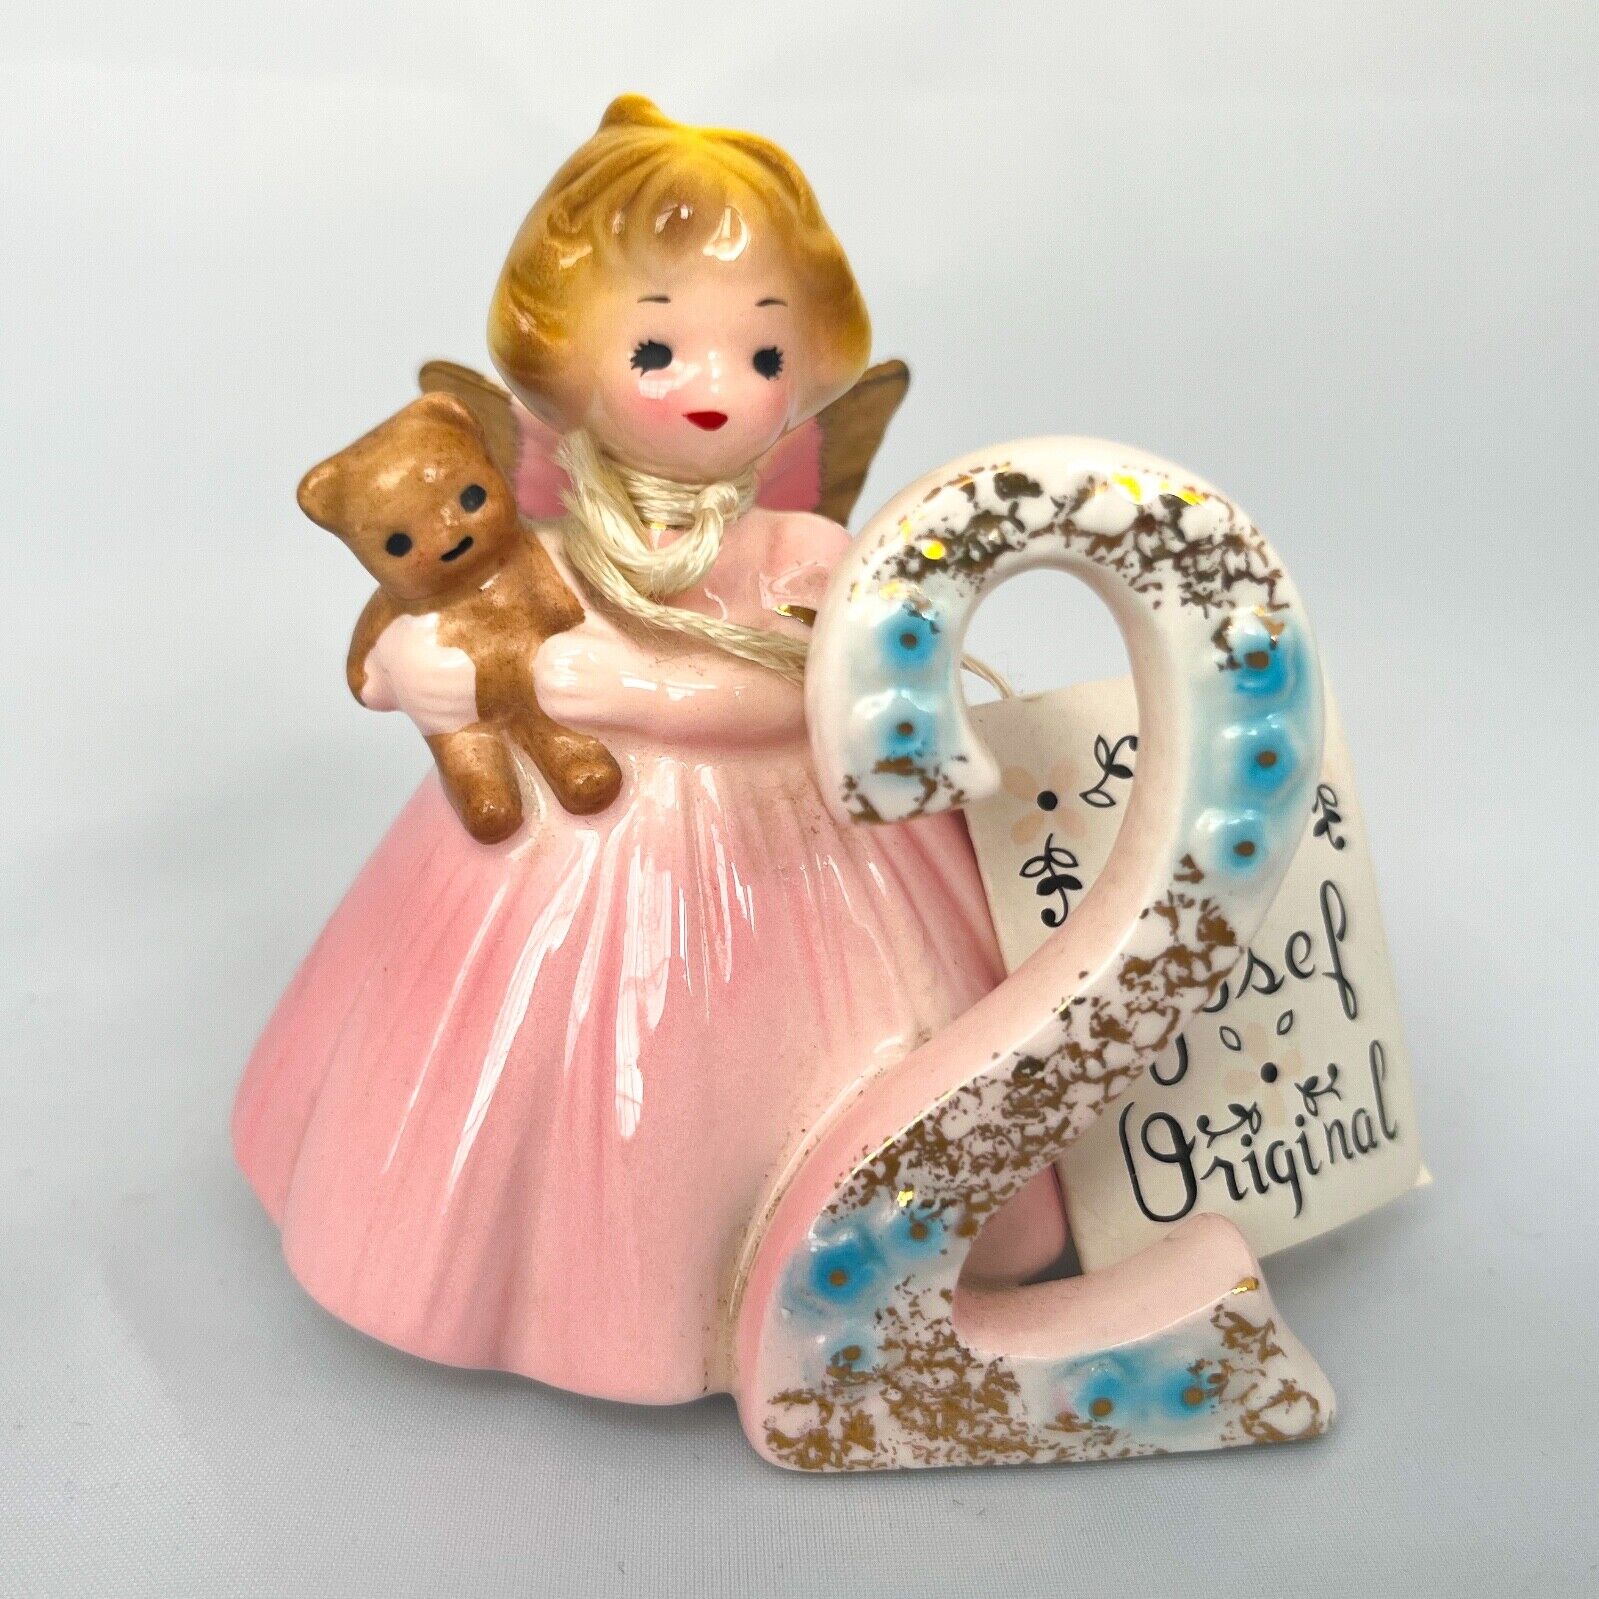 Josef Originals 2nd Birthday Girl Angel Porcelain Figurine with Tag Vintage 1979